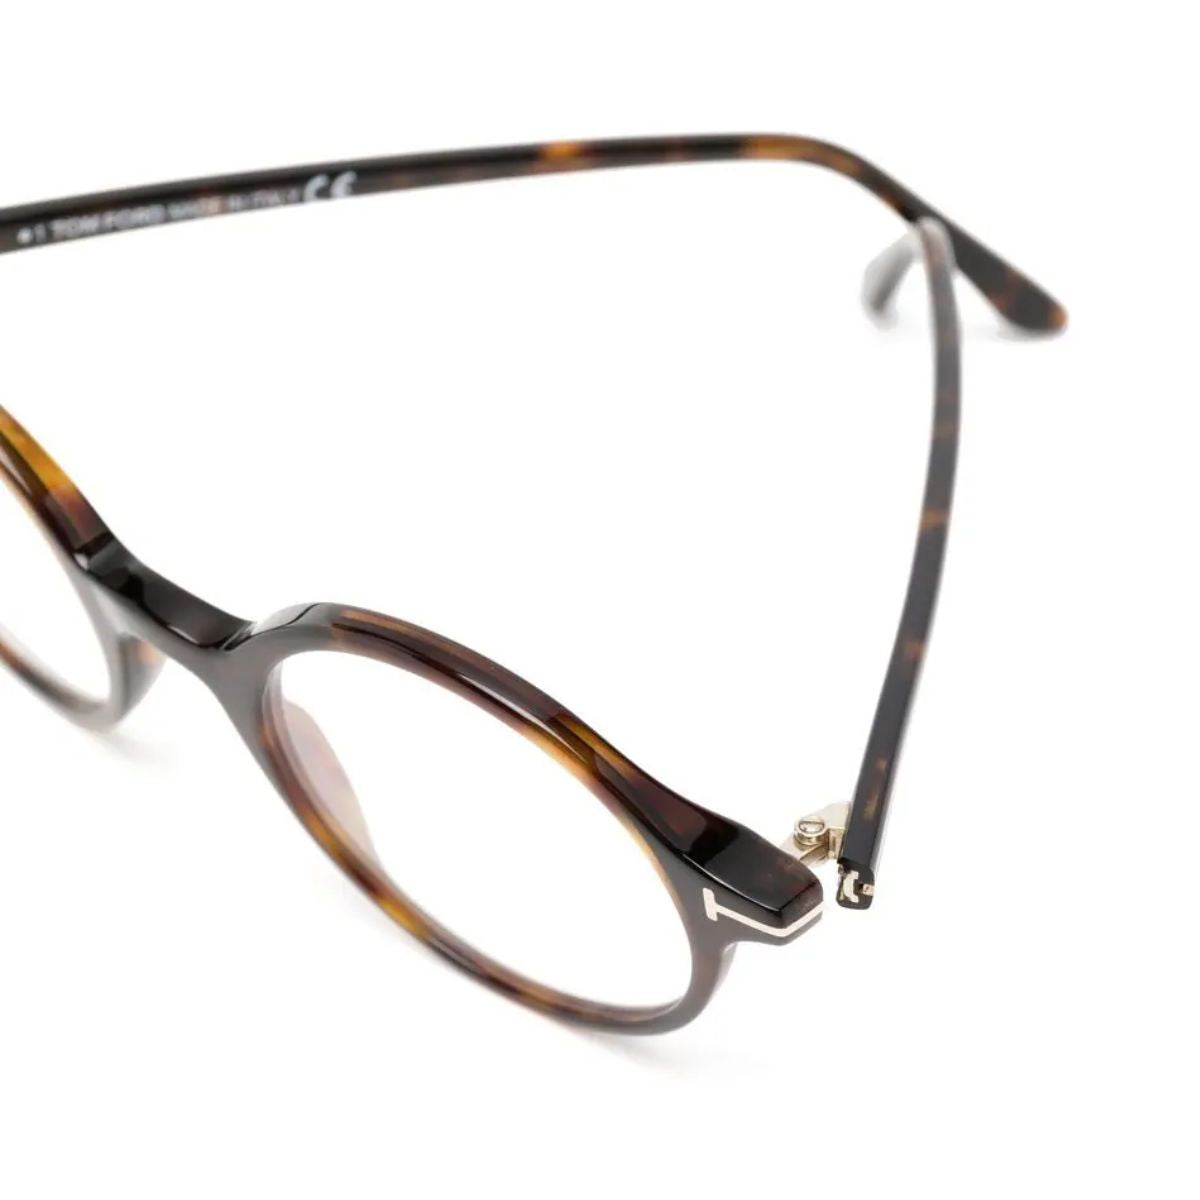 "Trendy Tom Ford Anti Reflection Eyeglasses For Men's At Optorium"